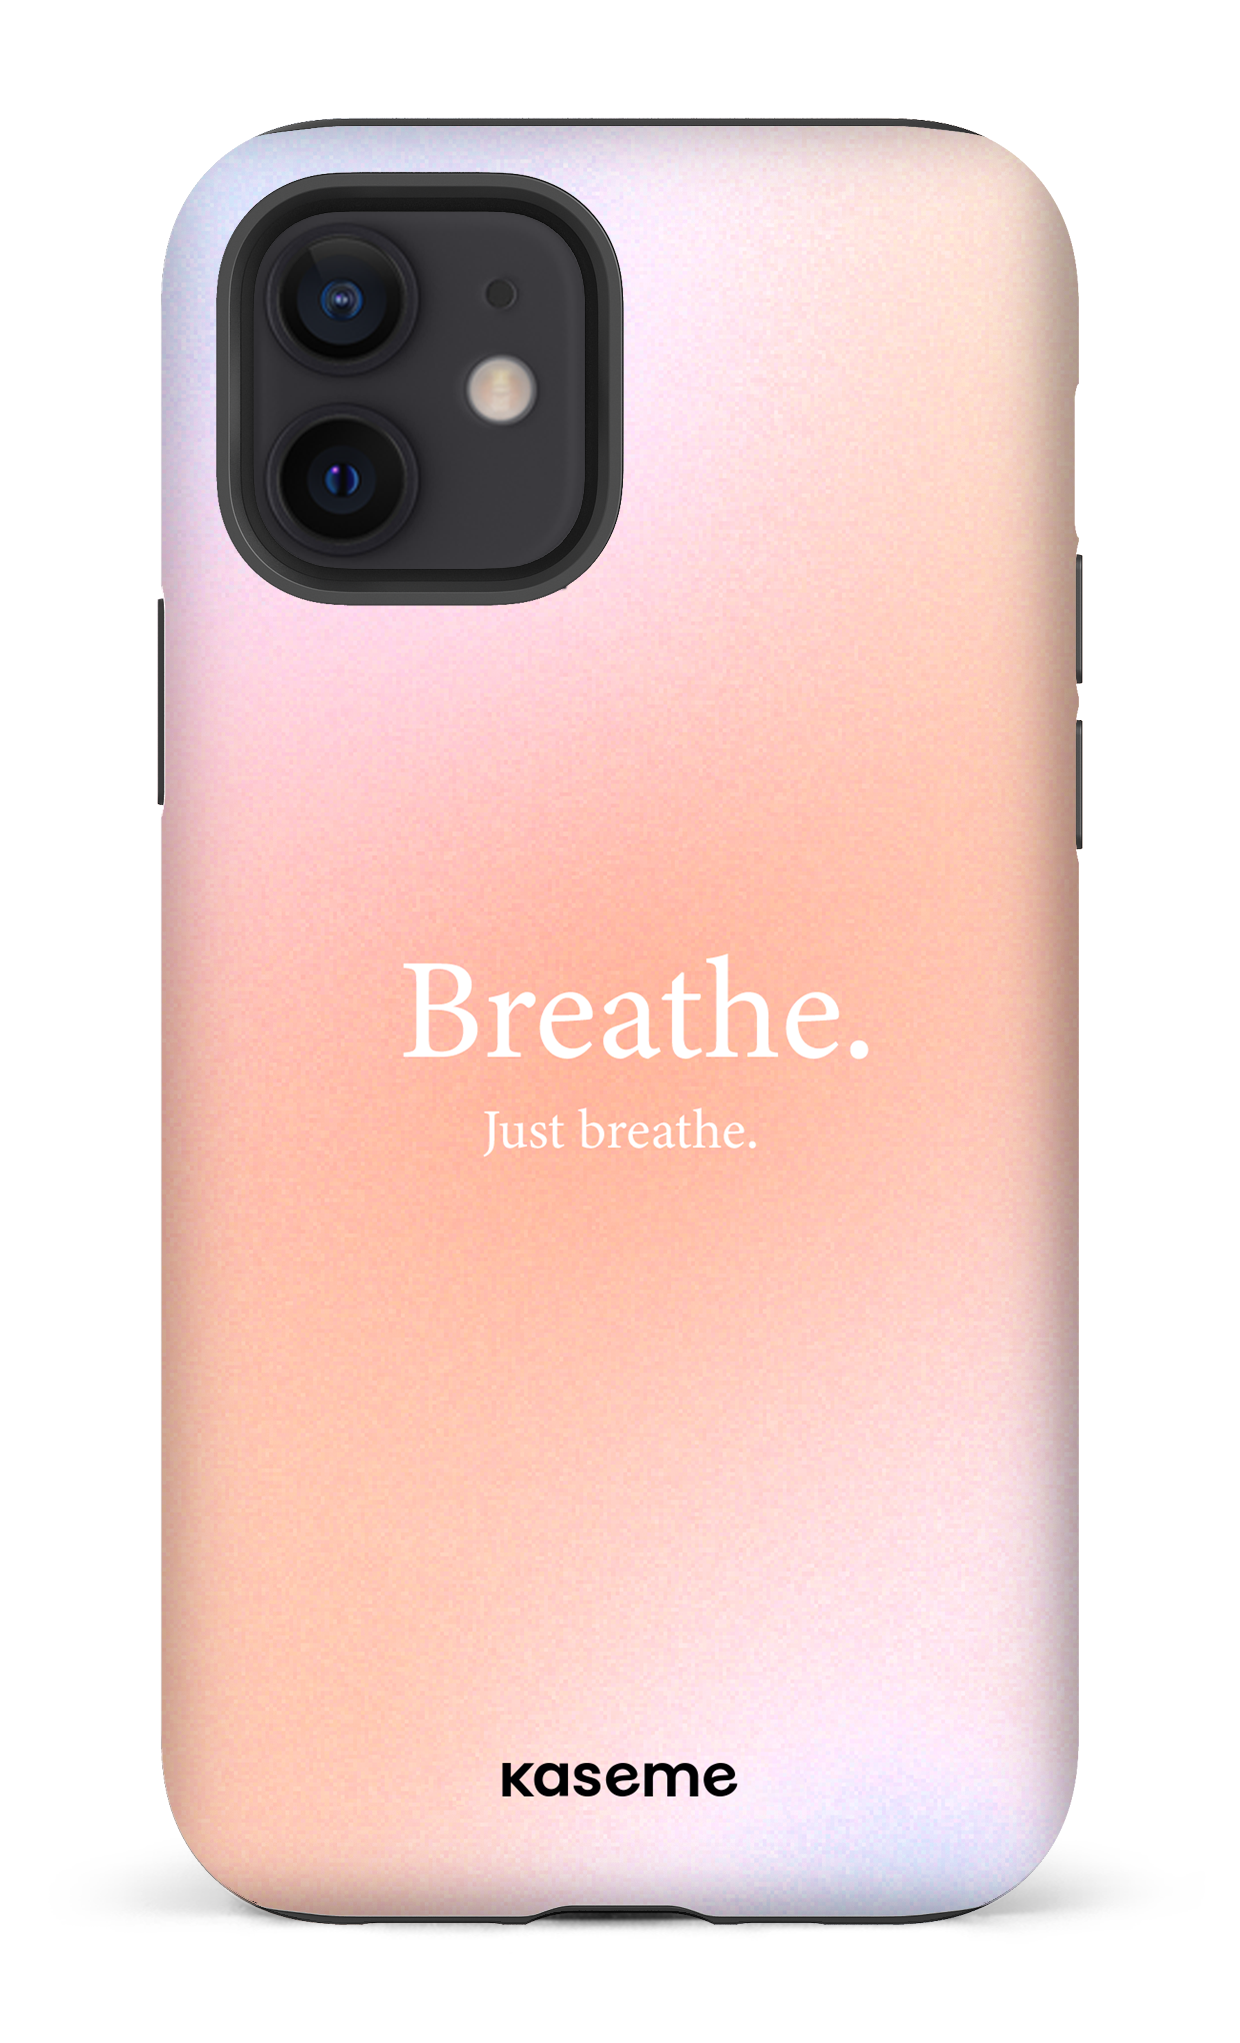 Just breathe - iPhone 12